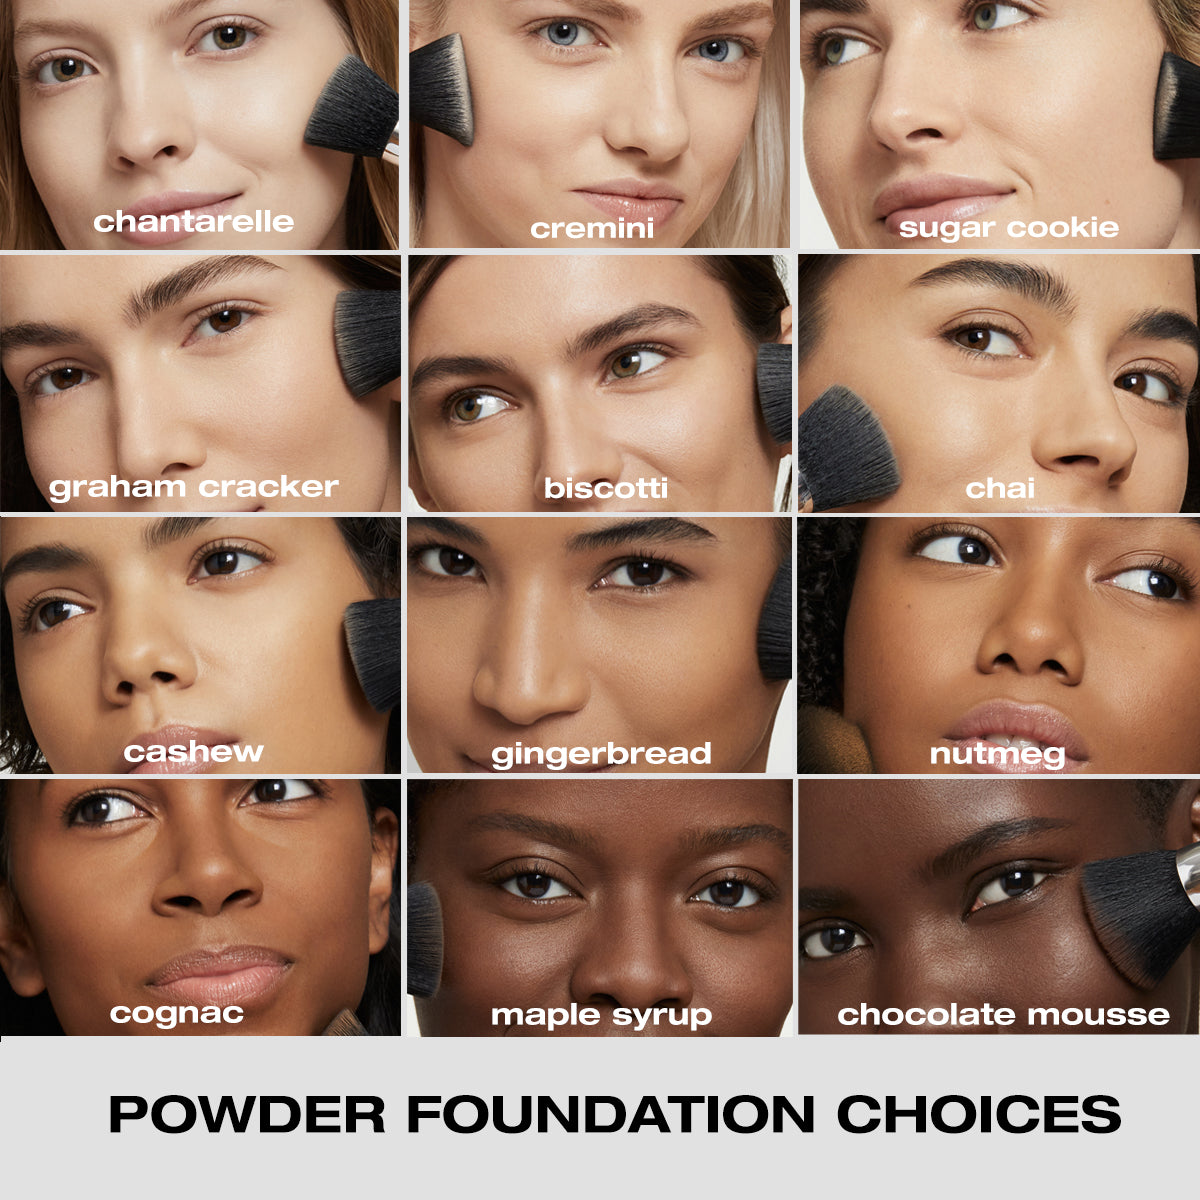 Powder foundation options from lightest to darkest: Chantarelle, cremini, sugar cooki, graham cracker, biscotti, chai, cashew, gingerbread, nutmeg, cognac, maple syrup, chocolate mousse